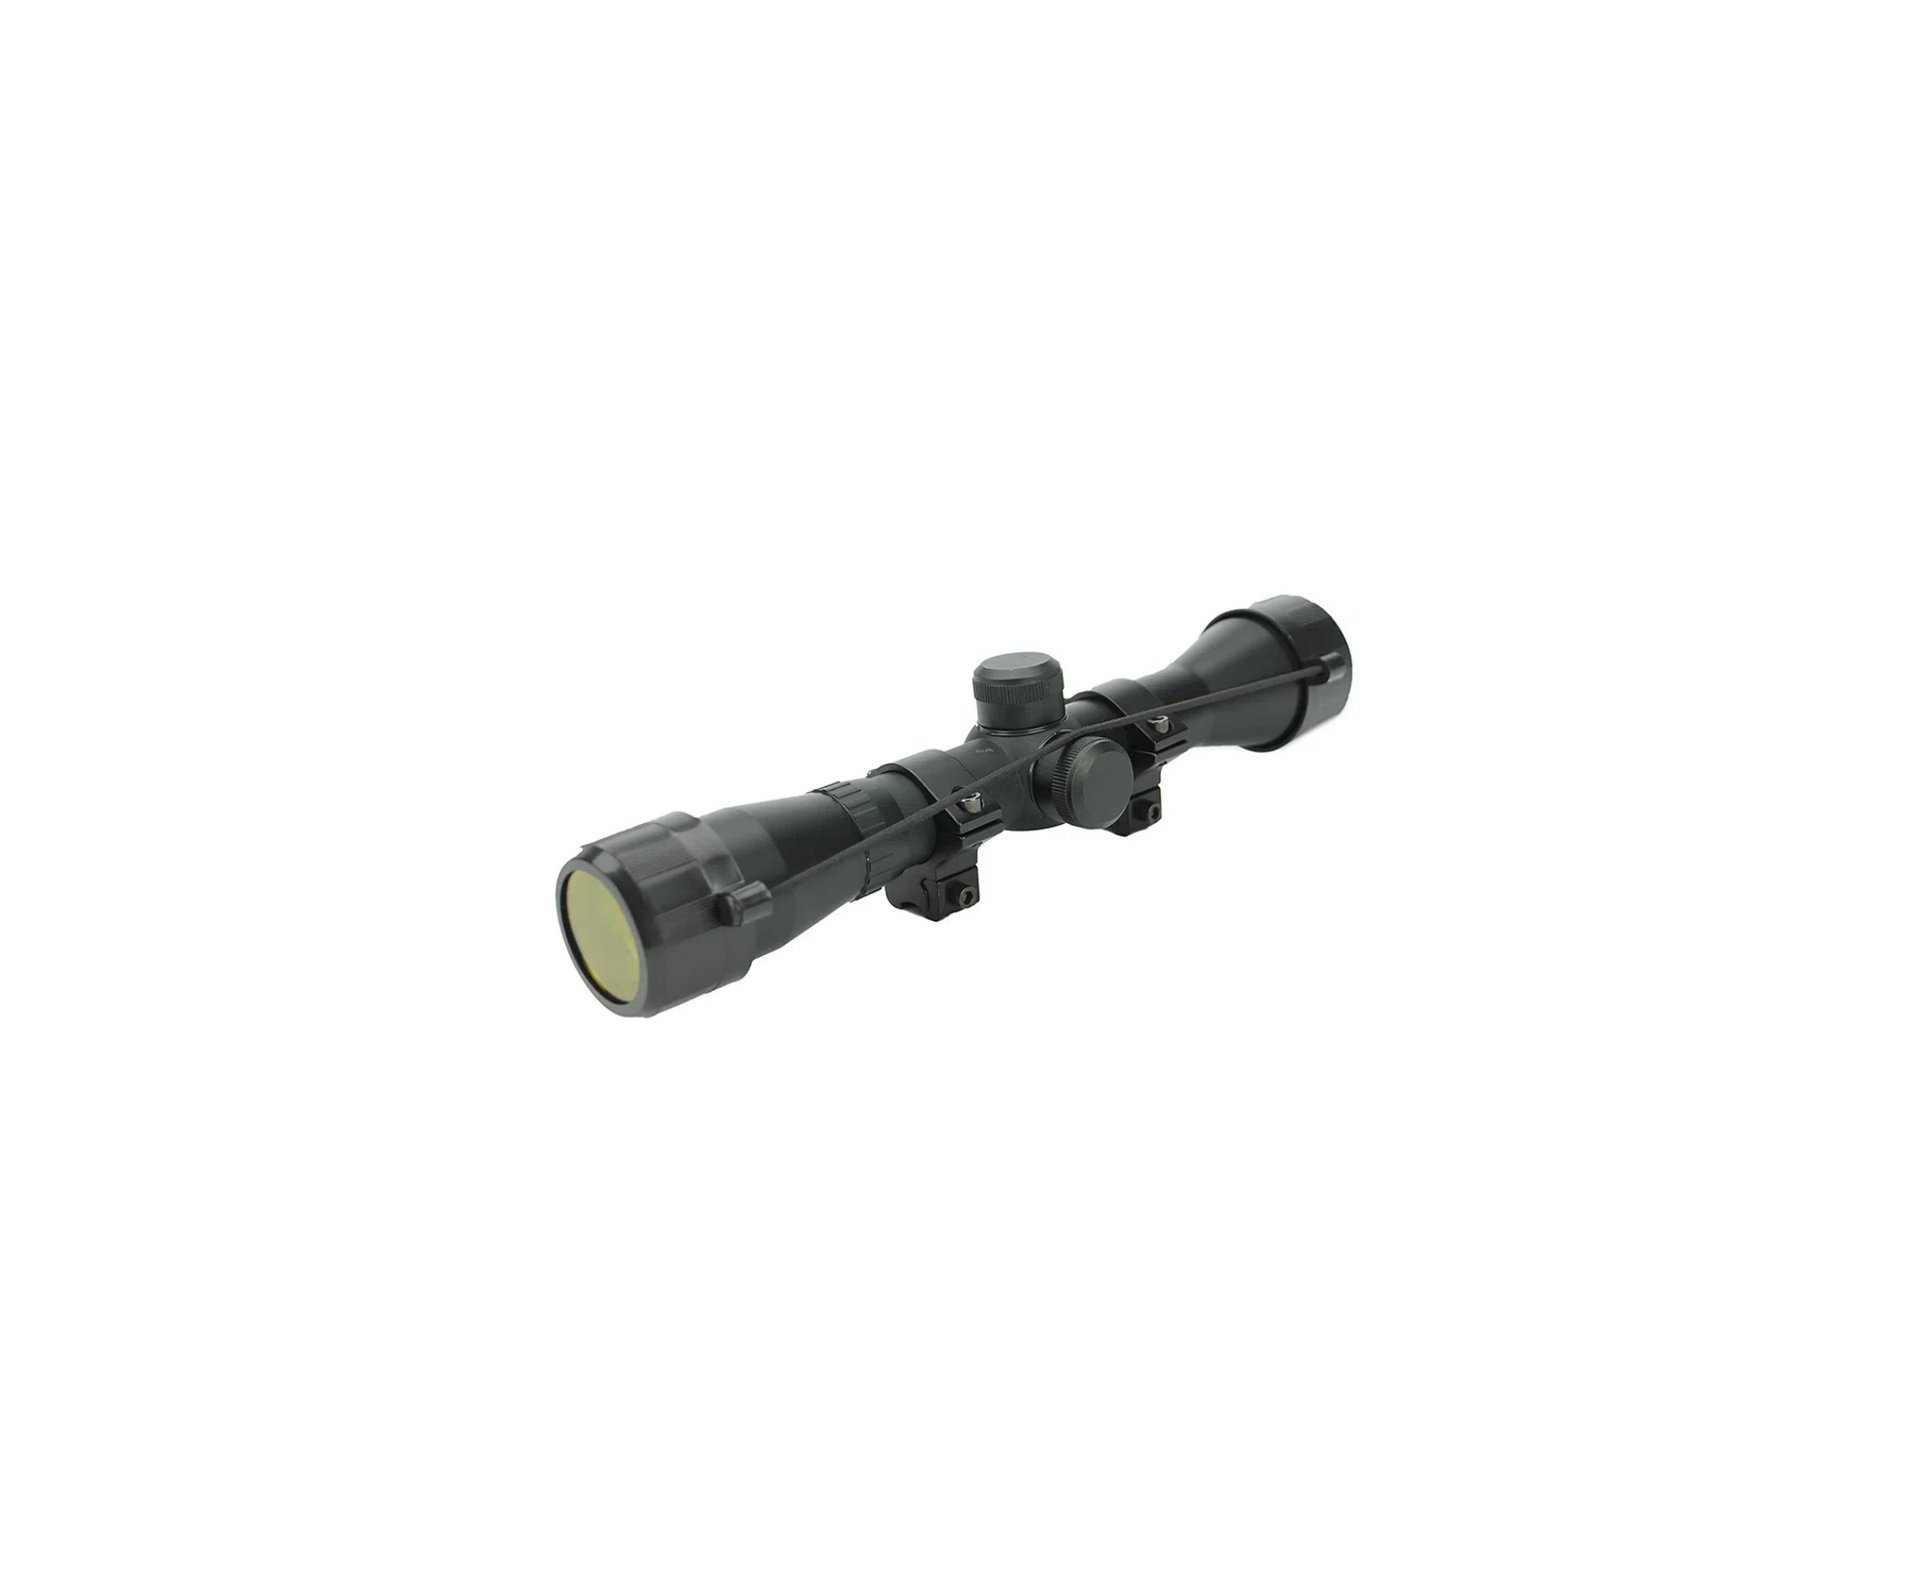 Carabina de Pressão TG-1 Match Gas Ram Nitro 5,5mm - TAG + Luneta 4x32 + Capa